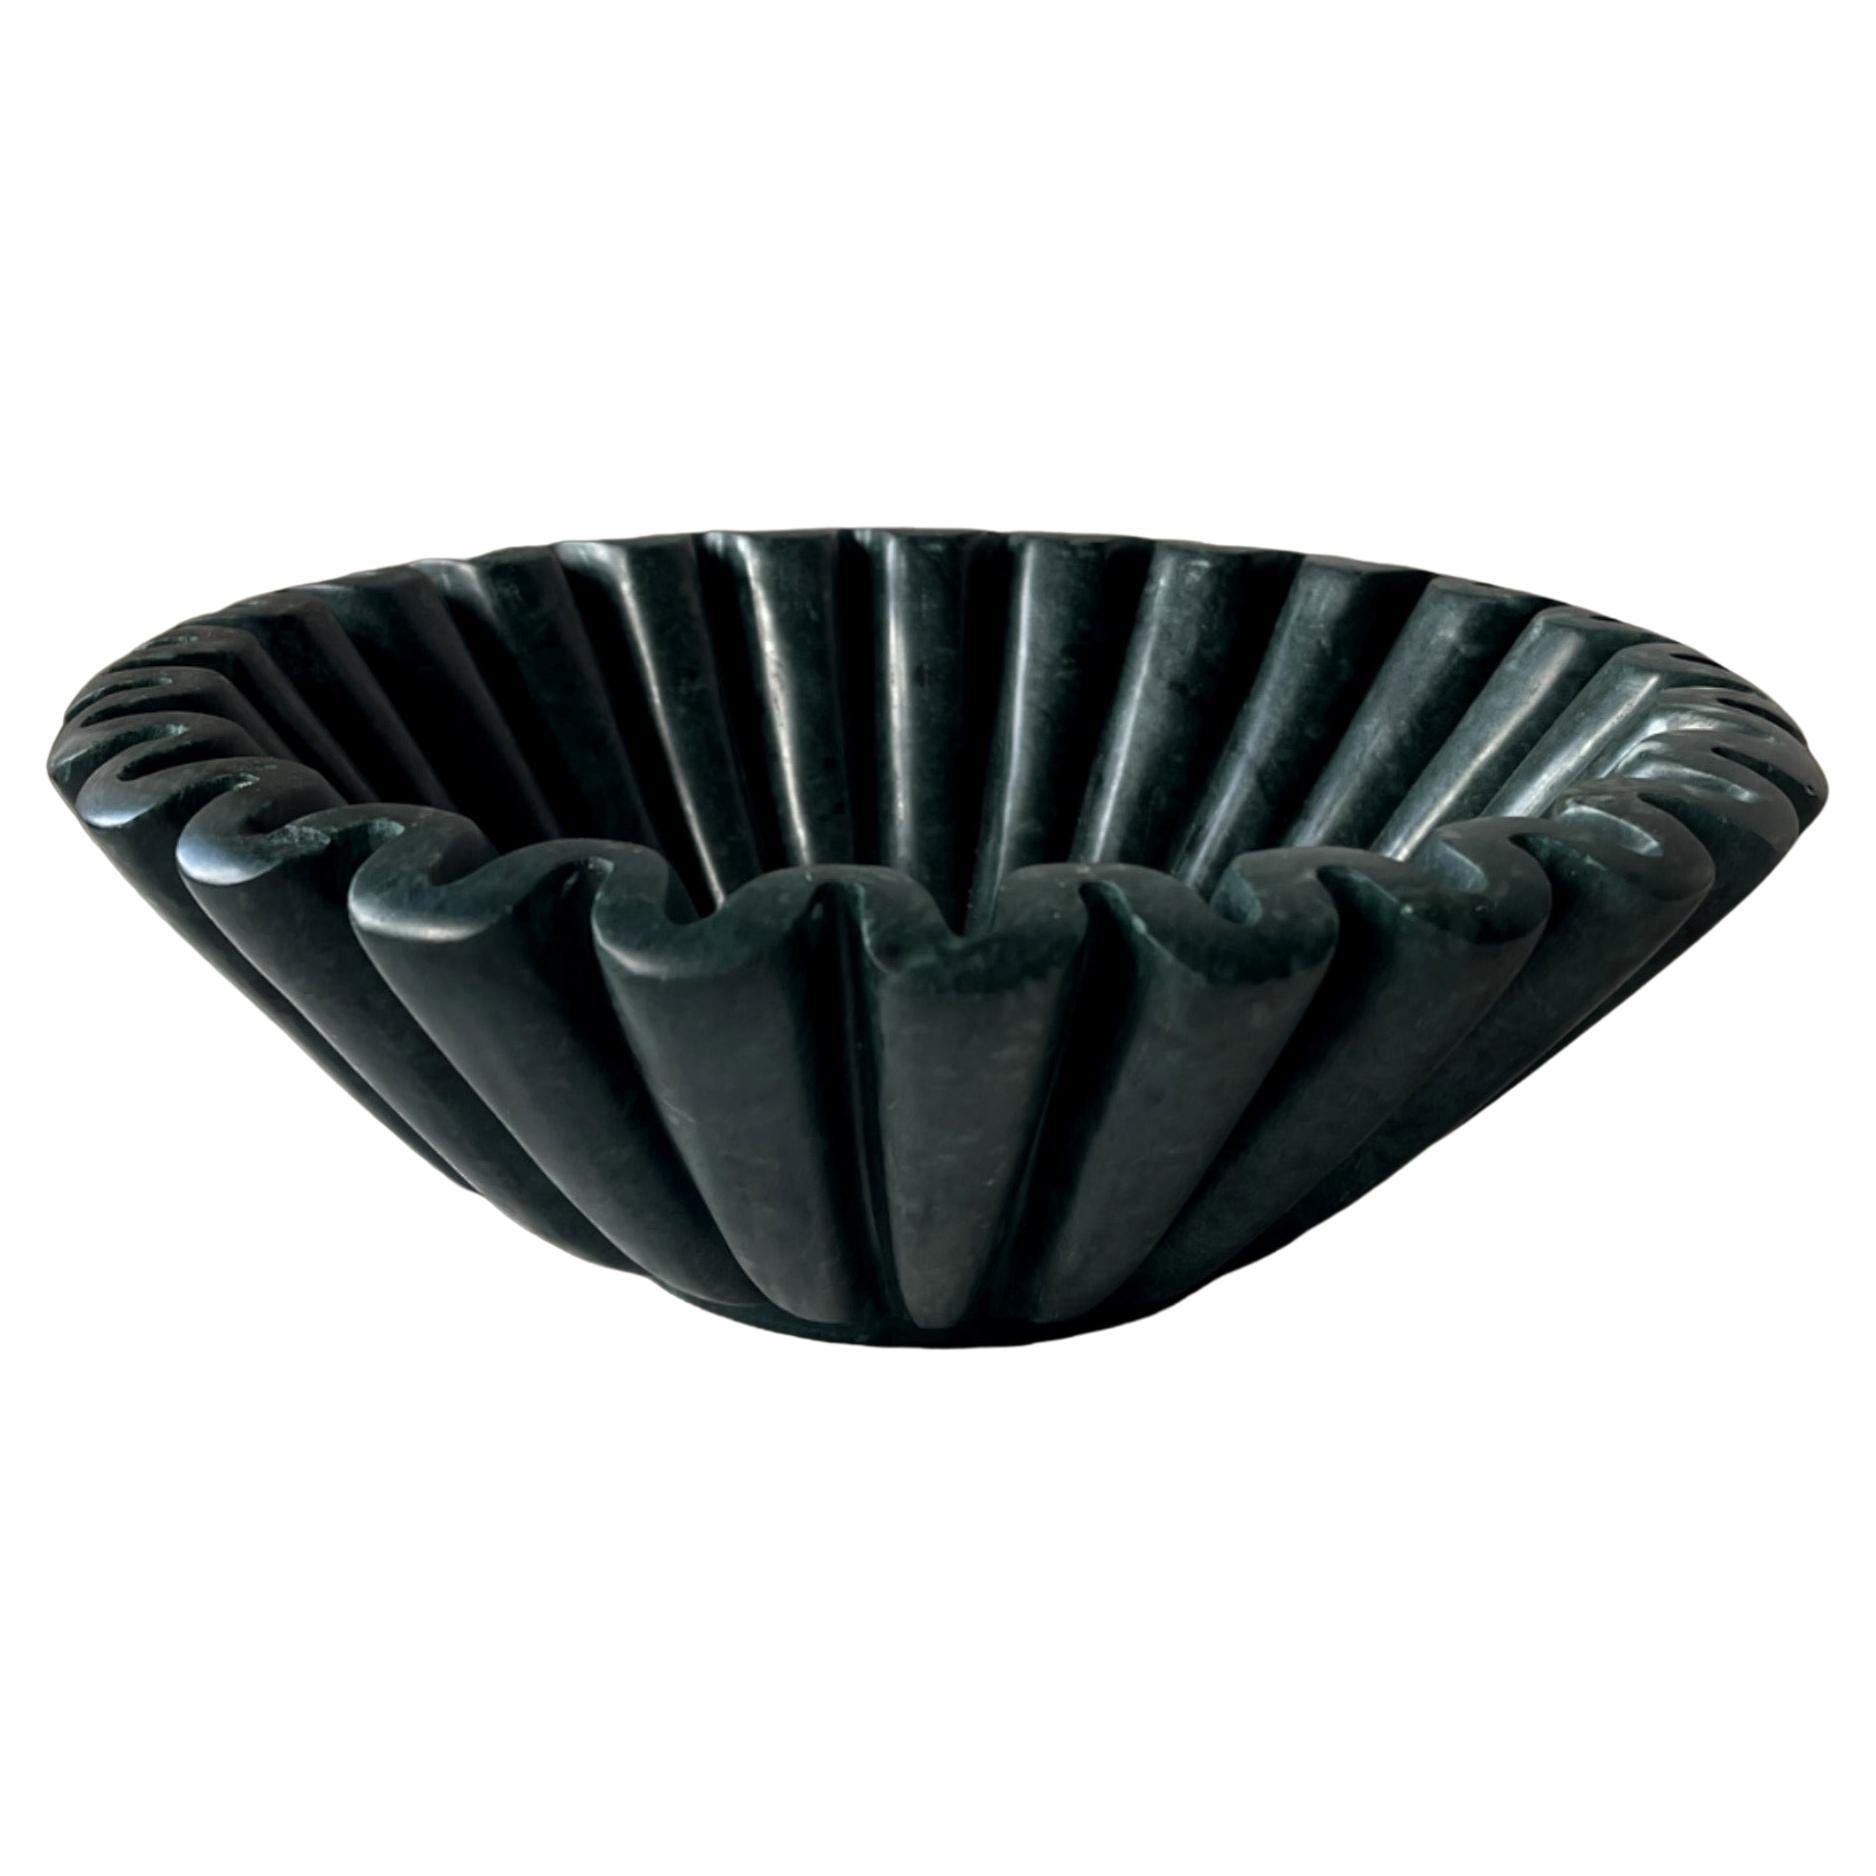 Ruffle Bowl: Dark Green Folded Edge Emerald Marble Bowl by Anastasio Home For Sale